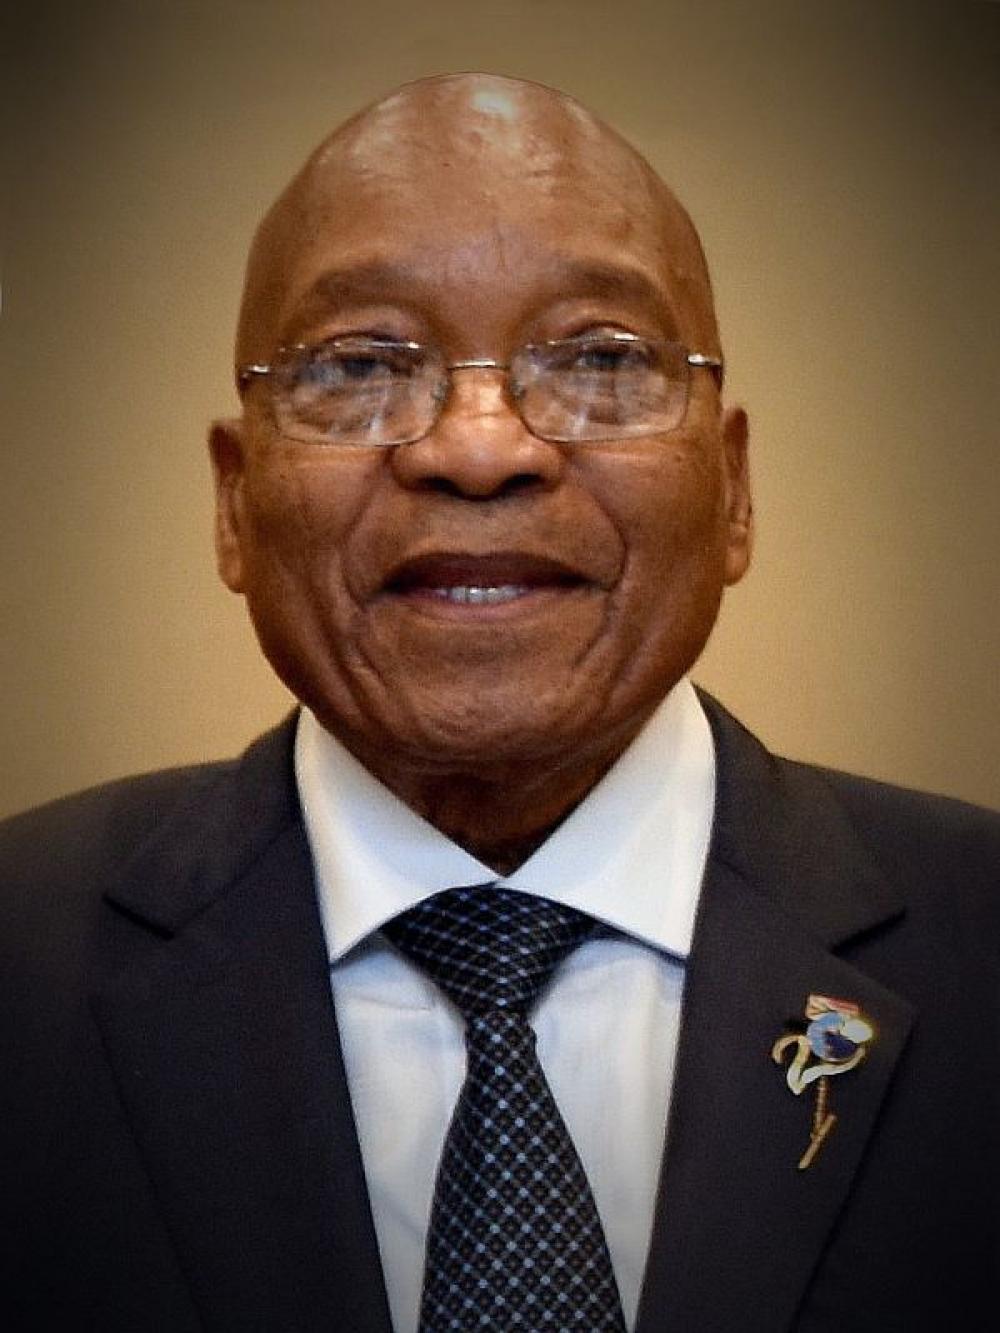 Court agrees to hear former South Africa Prez Jacob Zuma